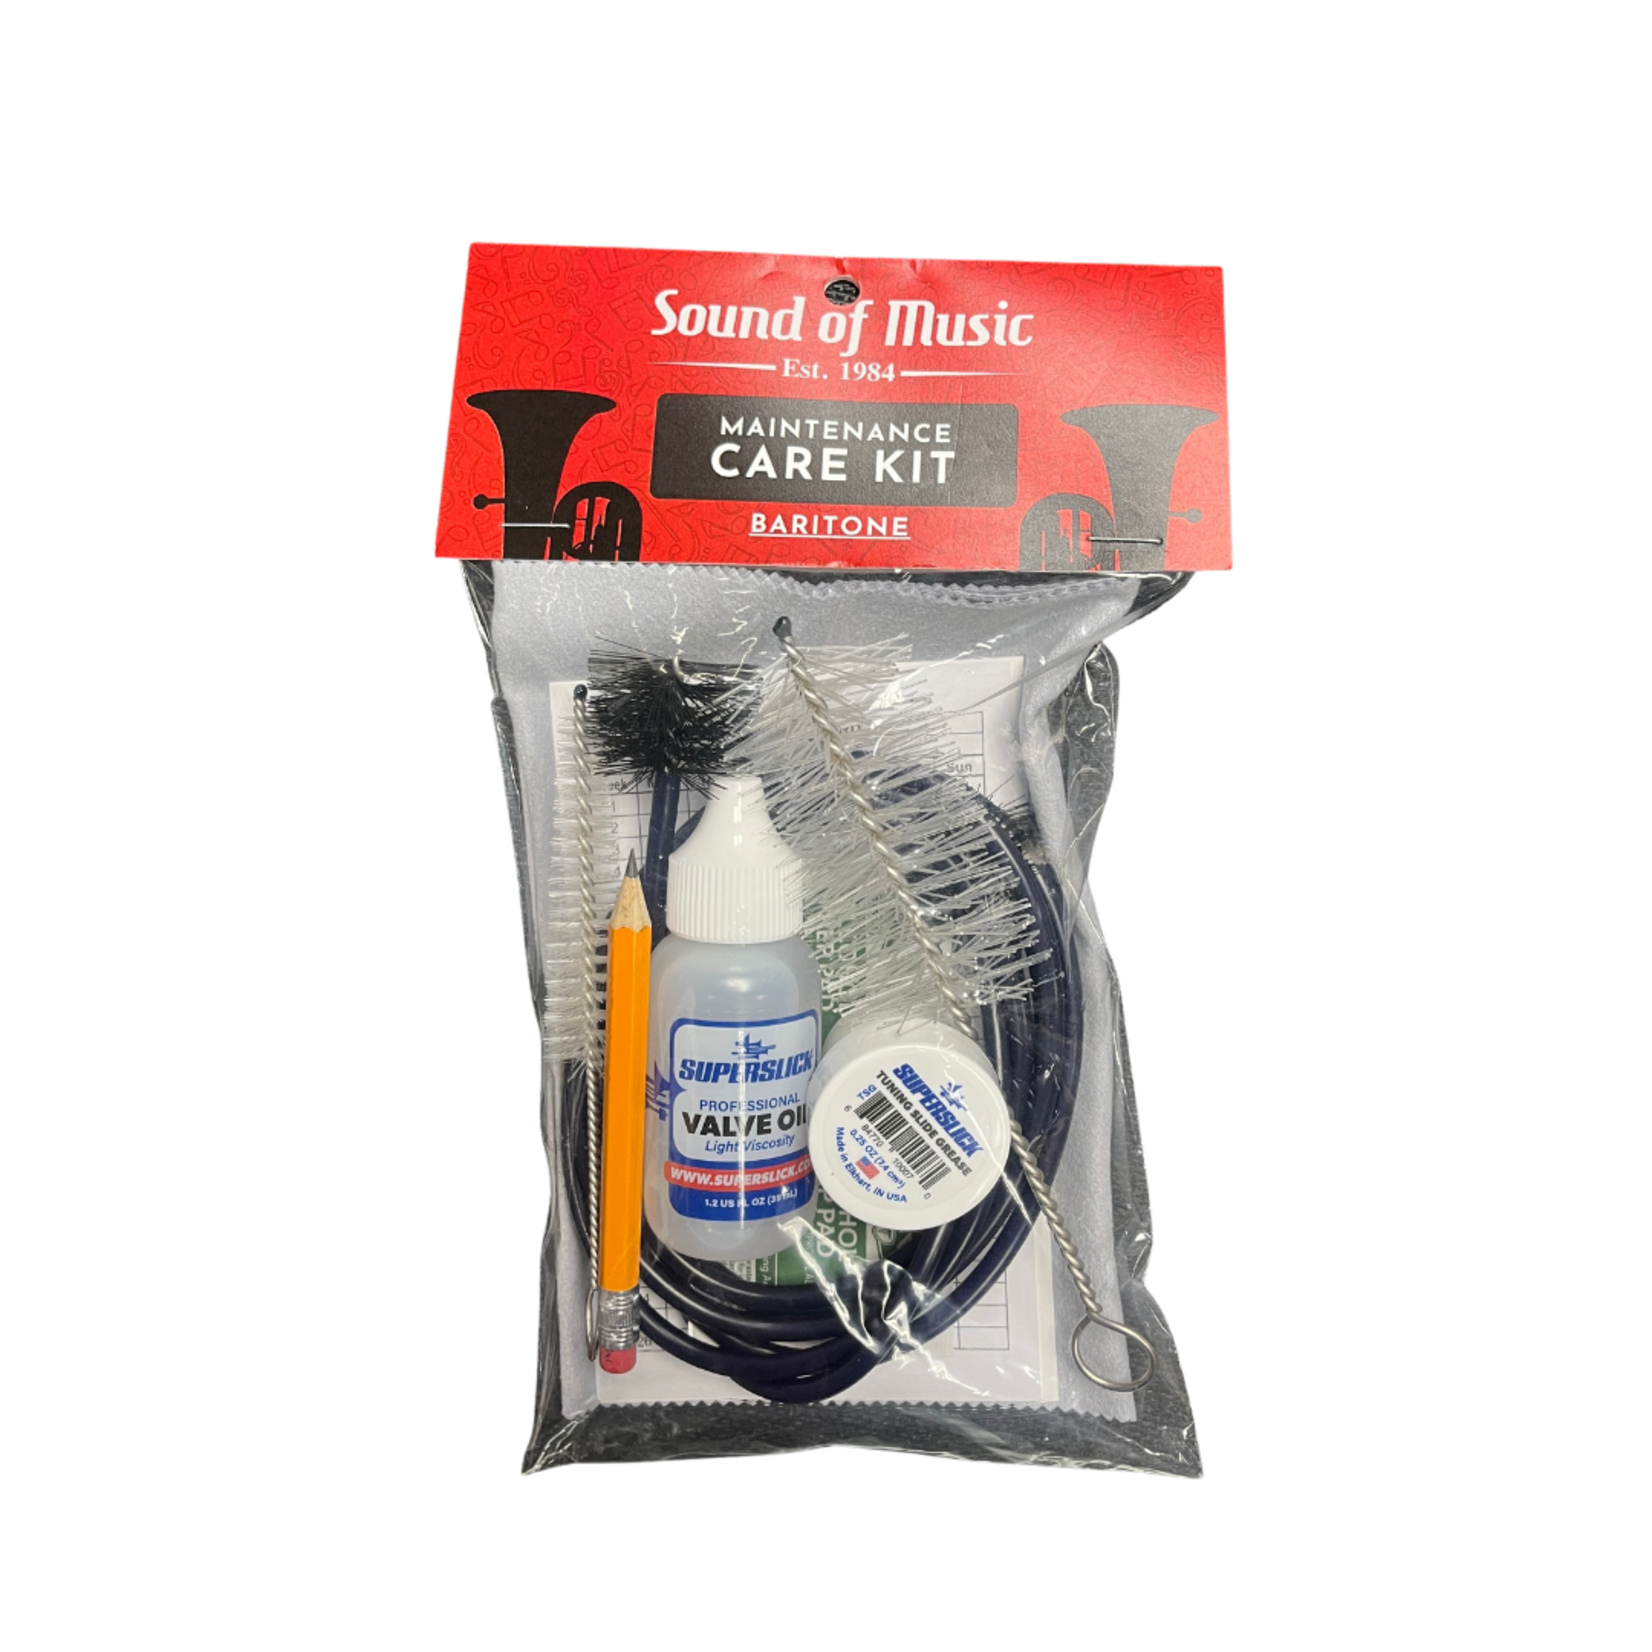 Sound of Music Baritone Care Kit